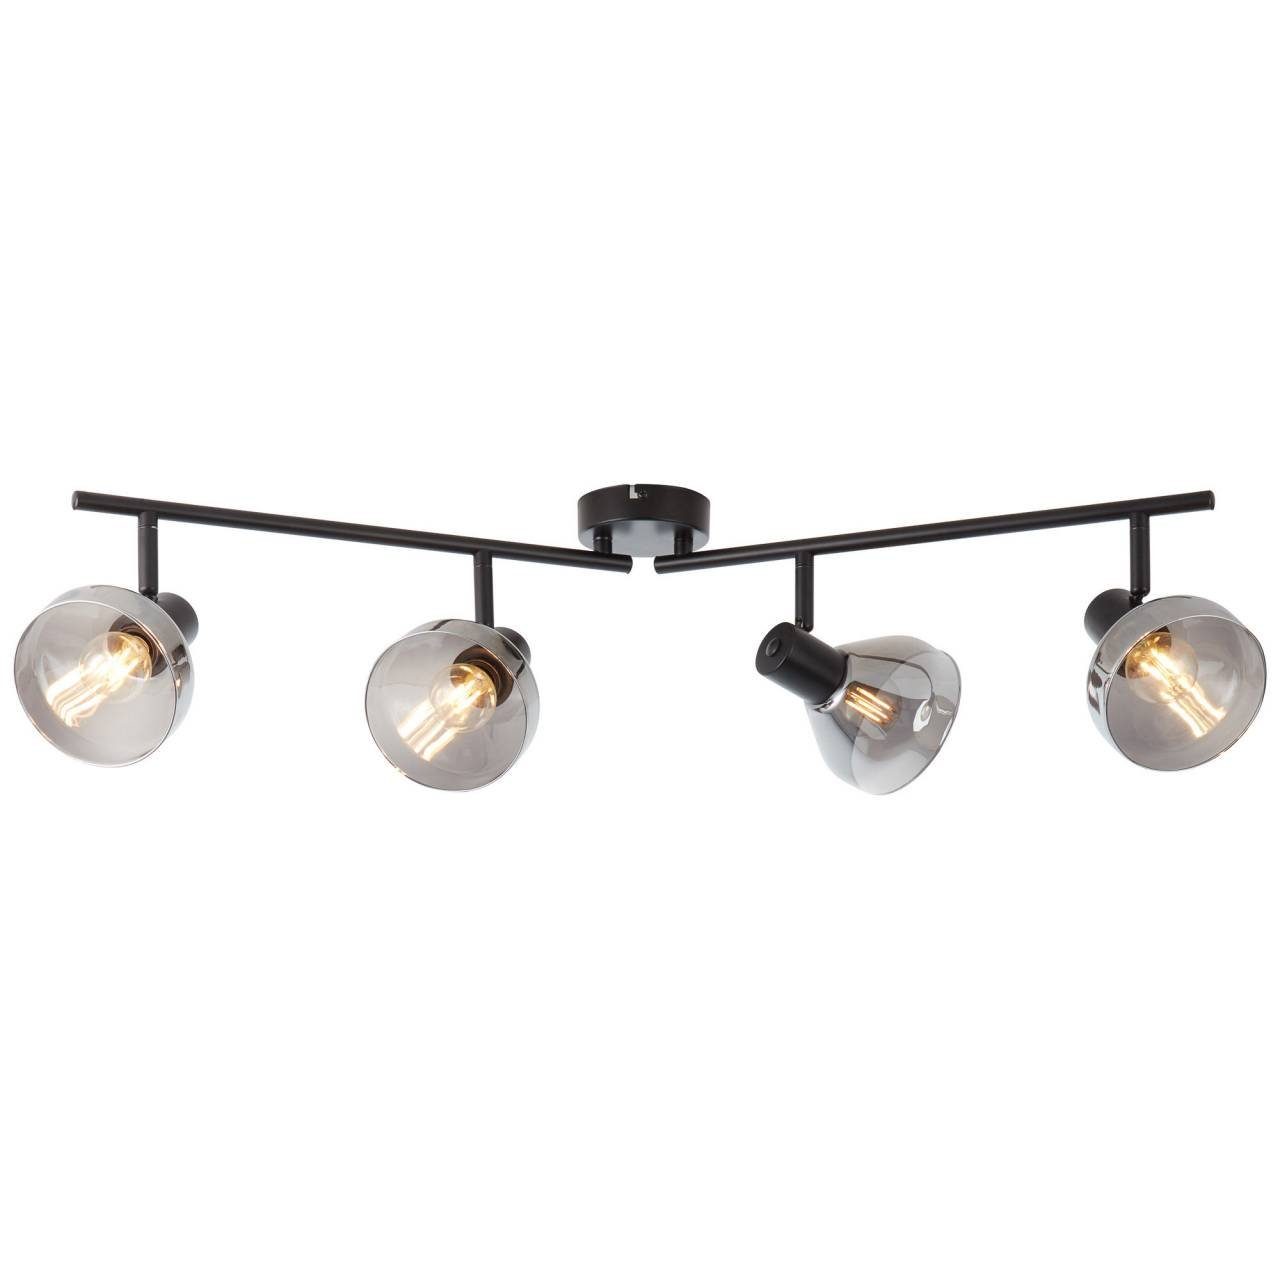 Lampe Brilliant Spotrohr Reflekt, 18W D45, schwarzmatt/rauchglas Reflekt E14, Deckenleuchte 4x 4flg